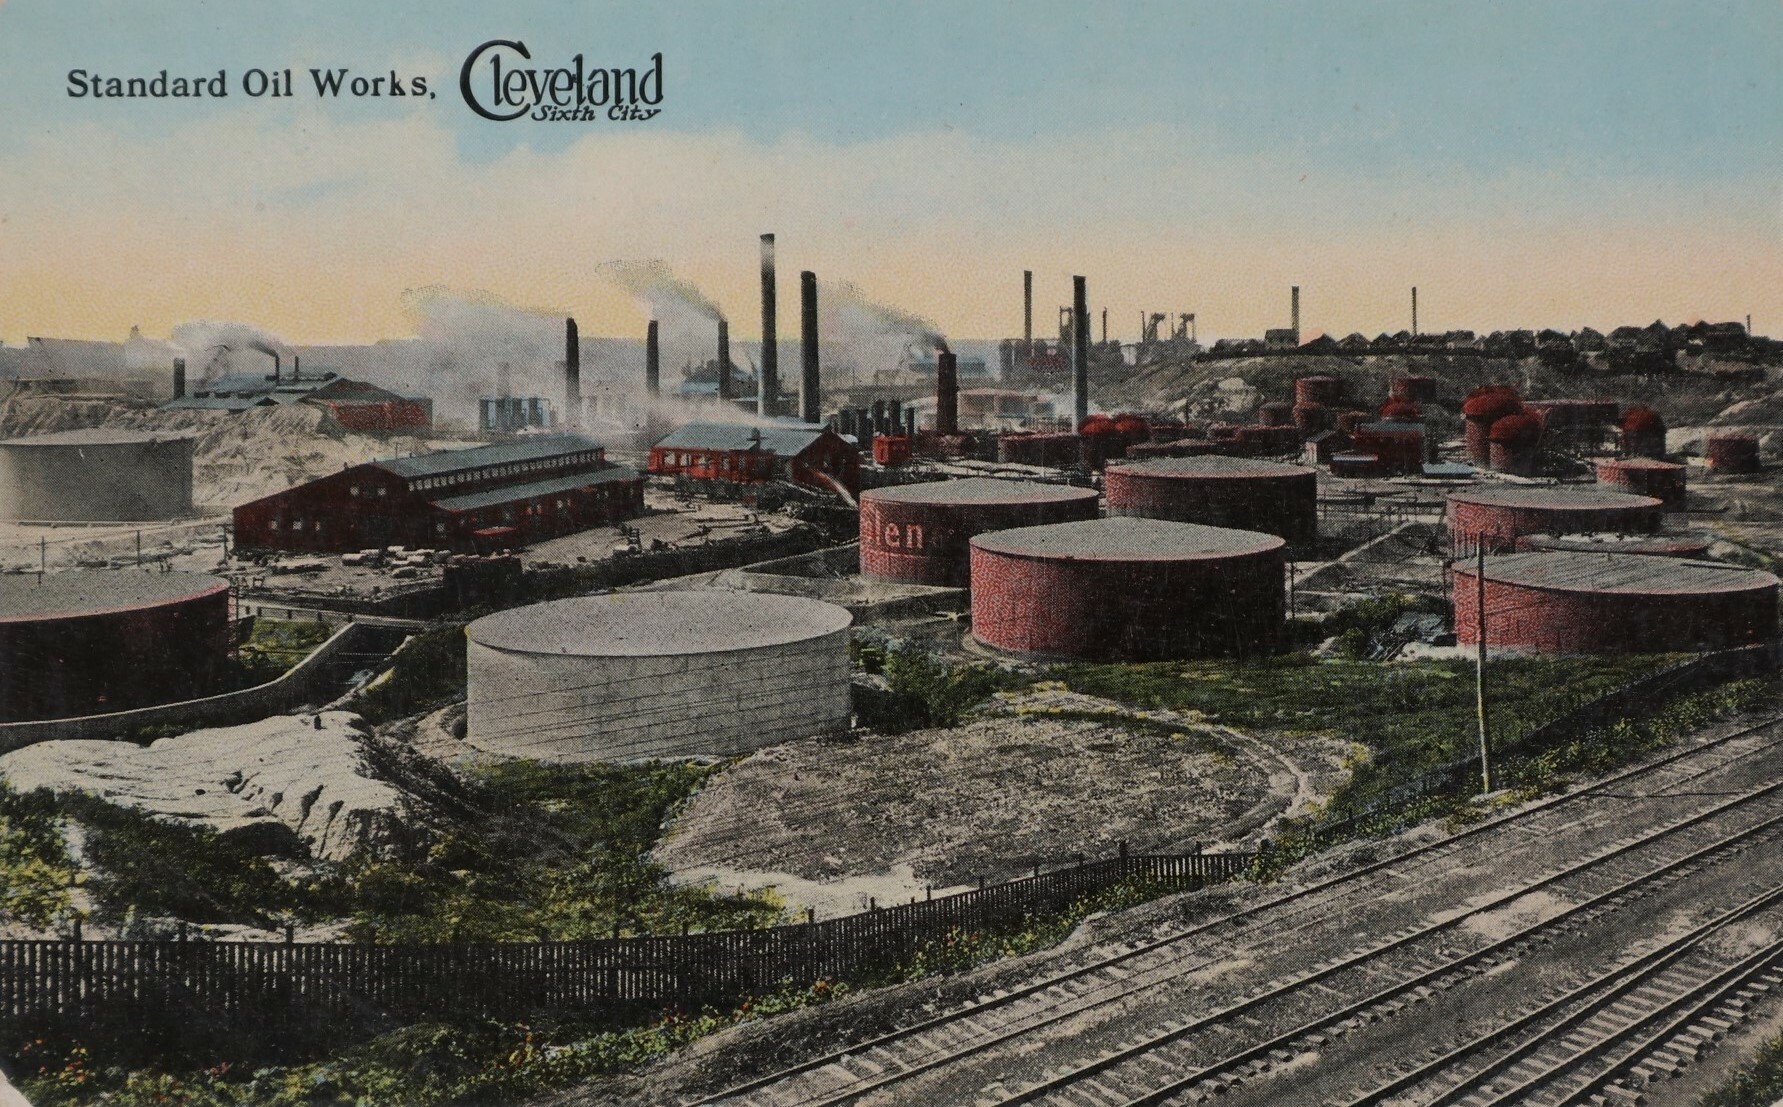 Stark industrial site postcard of oil works. Canterbury Museum 2004.39.2182